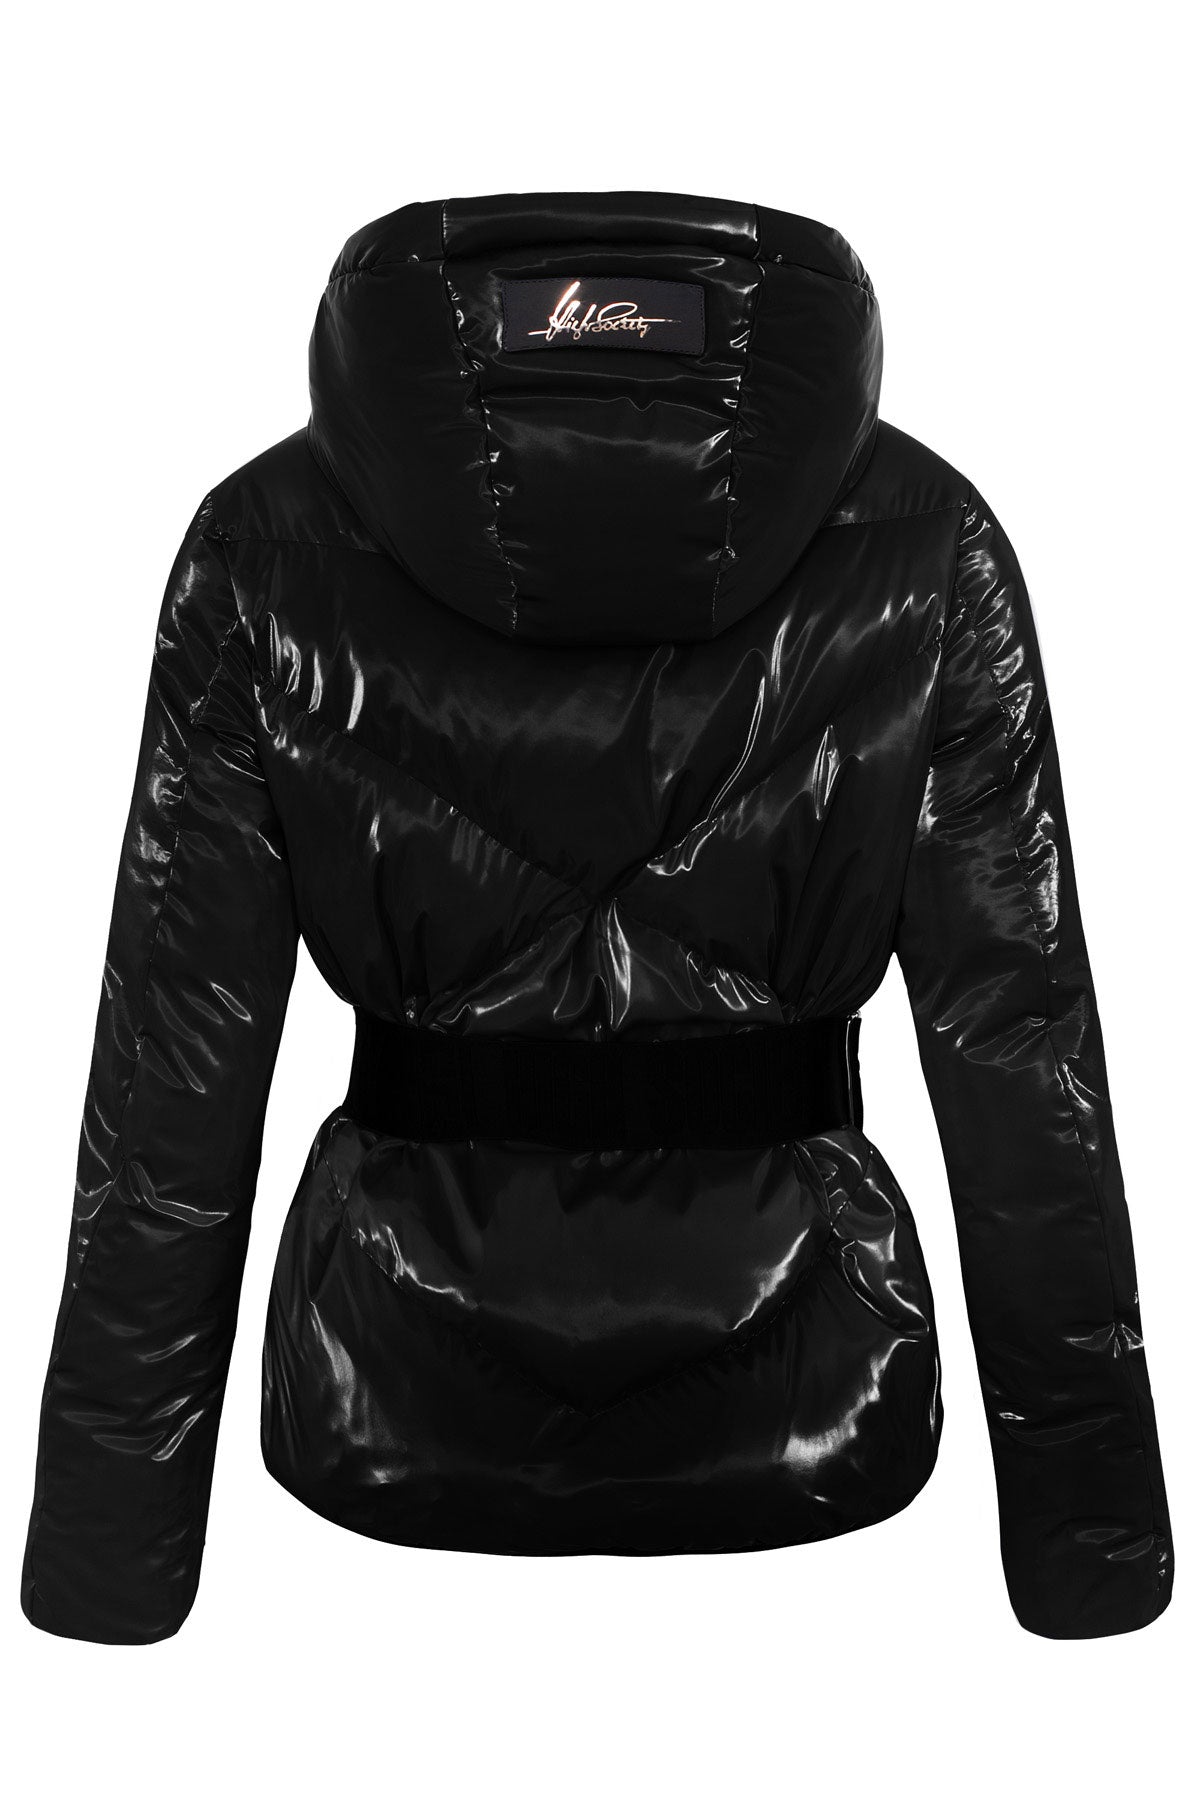 High Society Tess Ski Jacket in Black with Hood